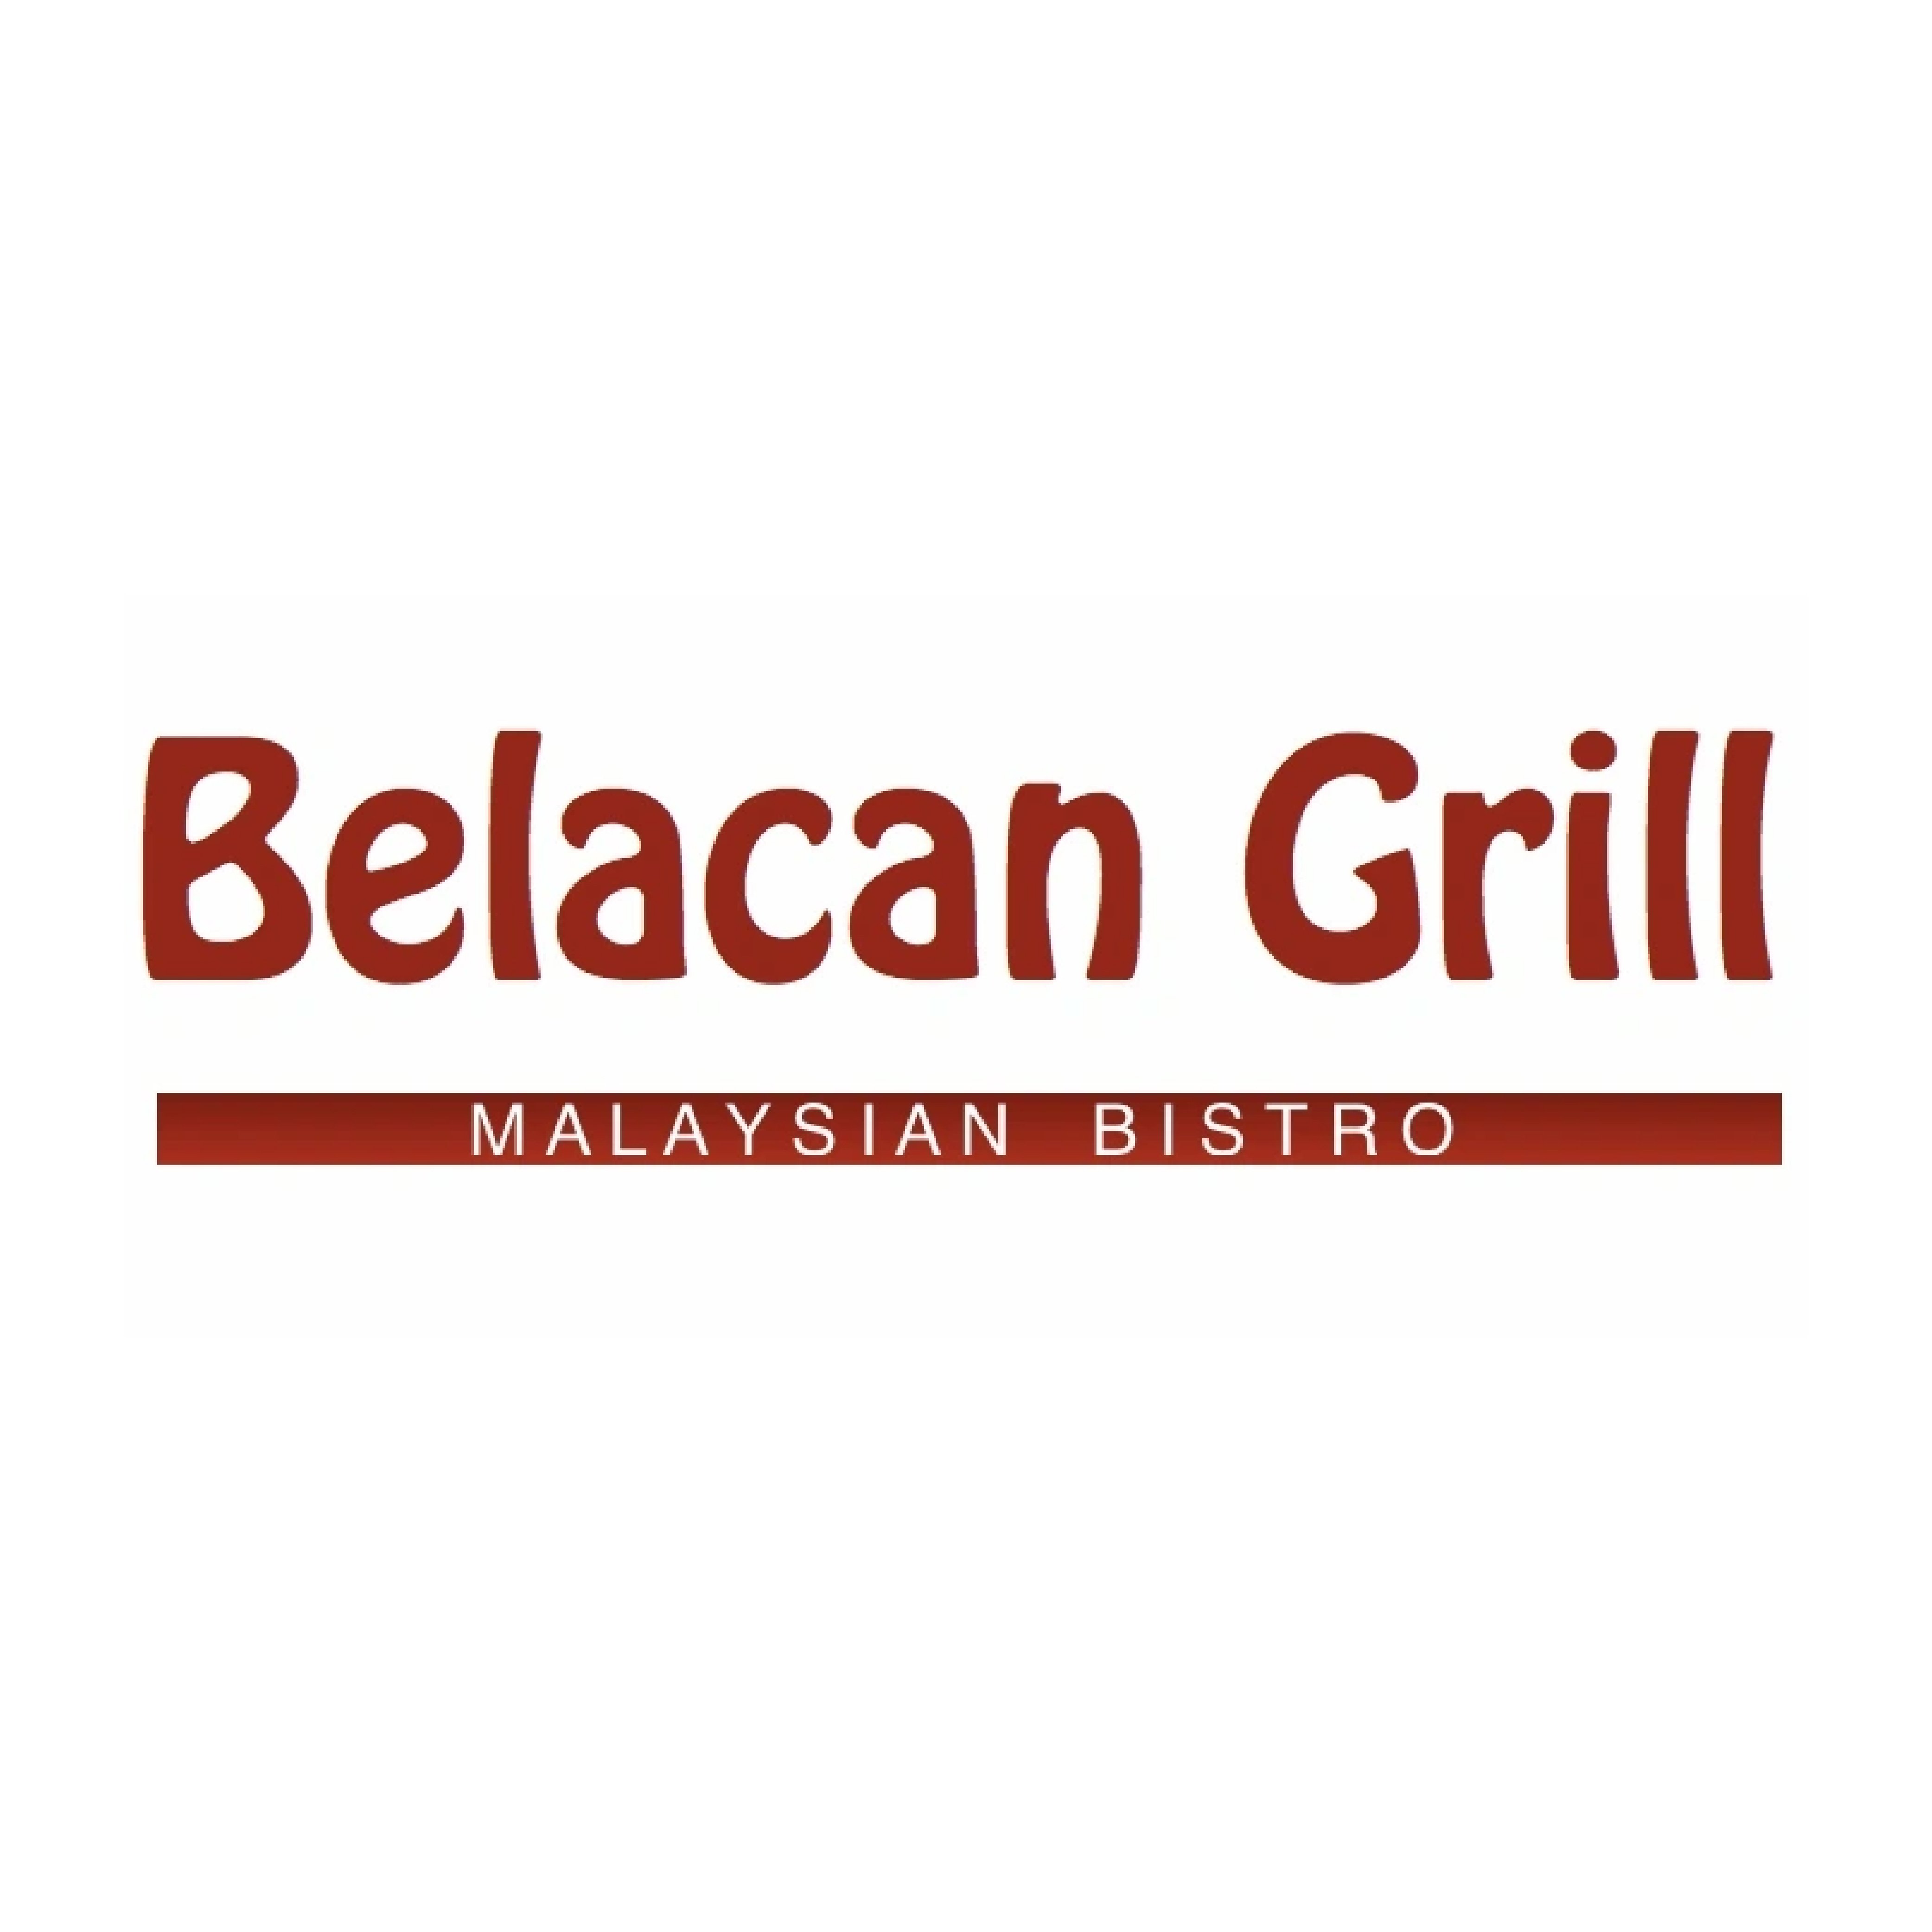 Belacan Grill - Malaysian Bistro Profile